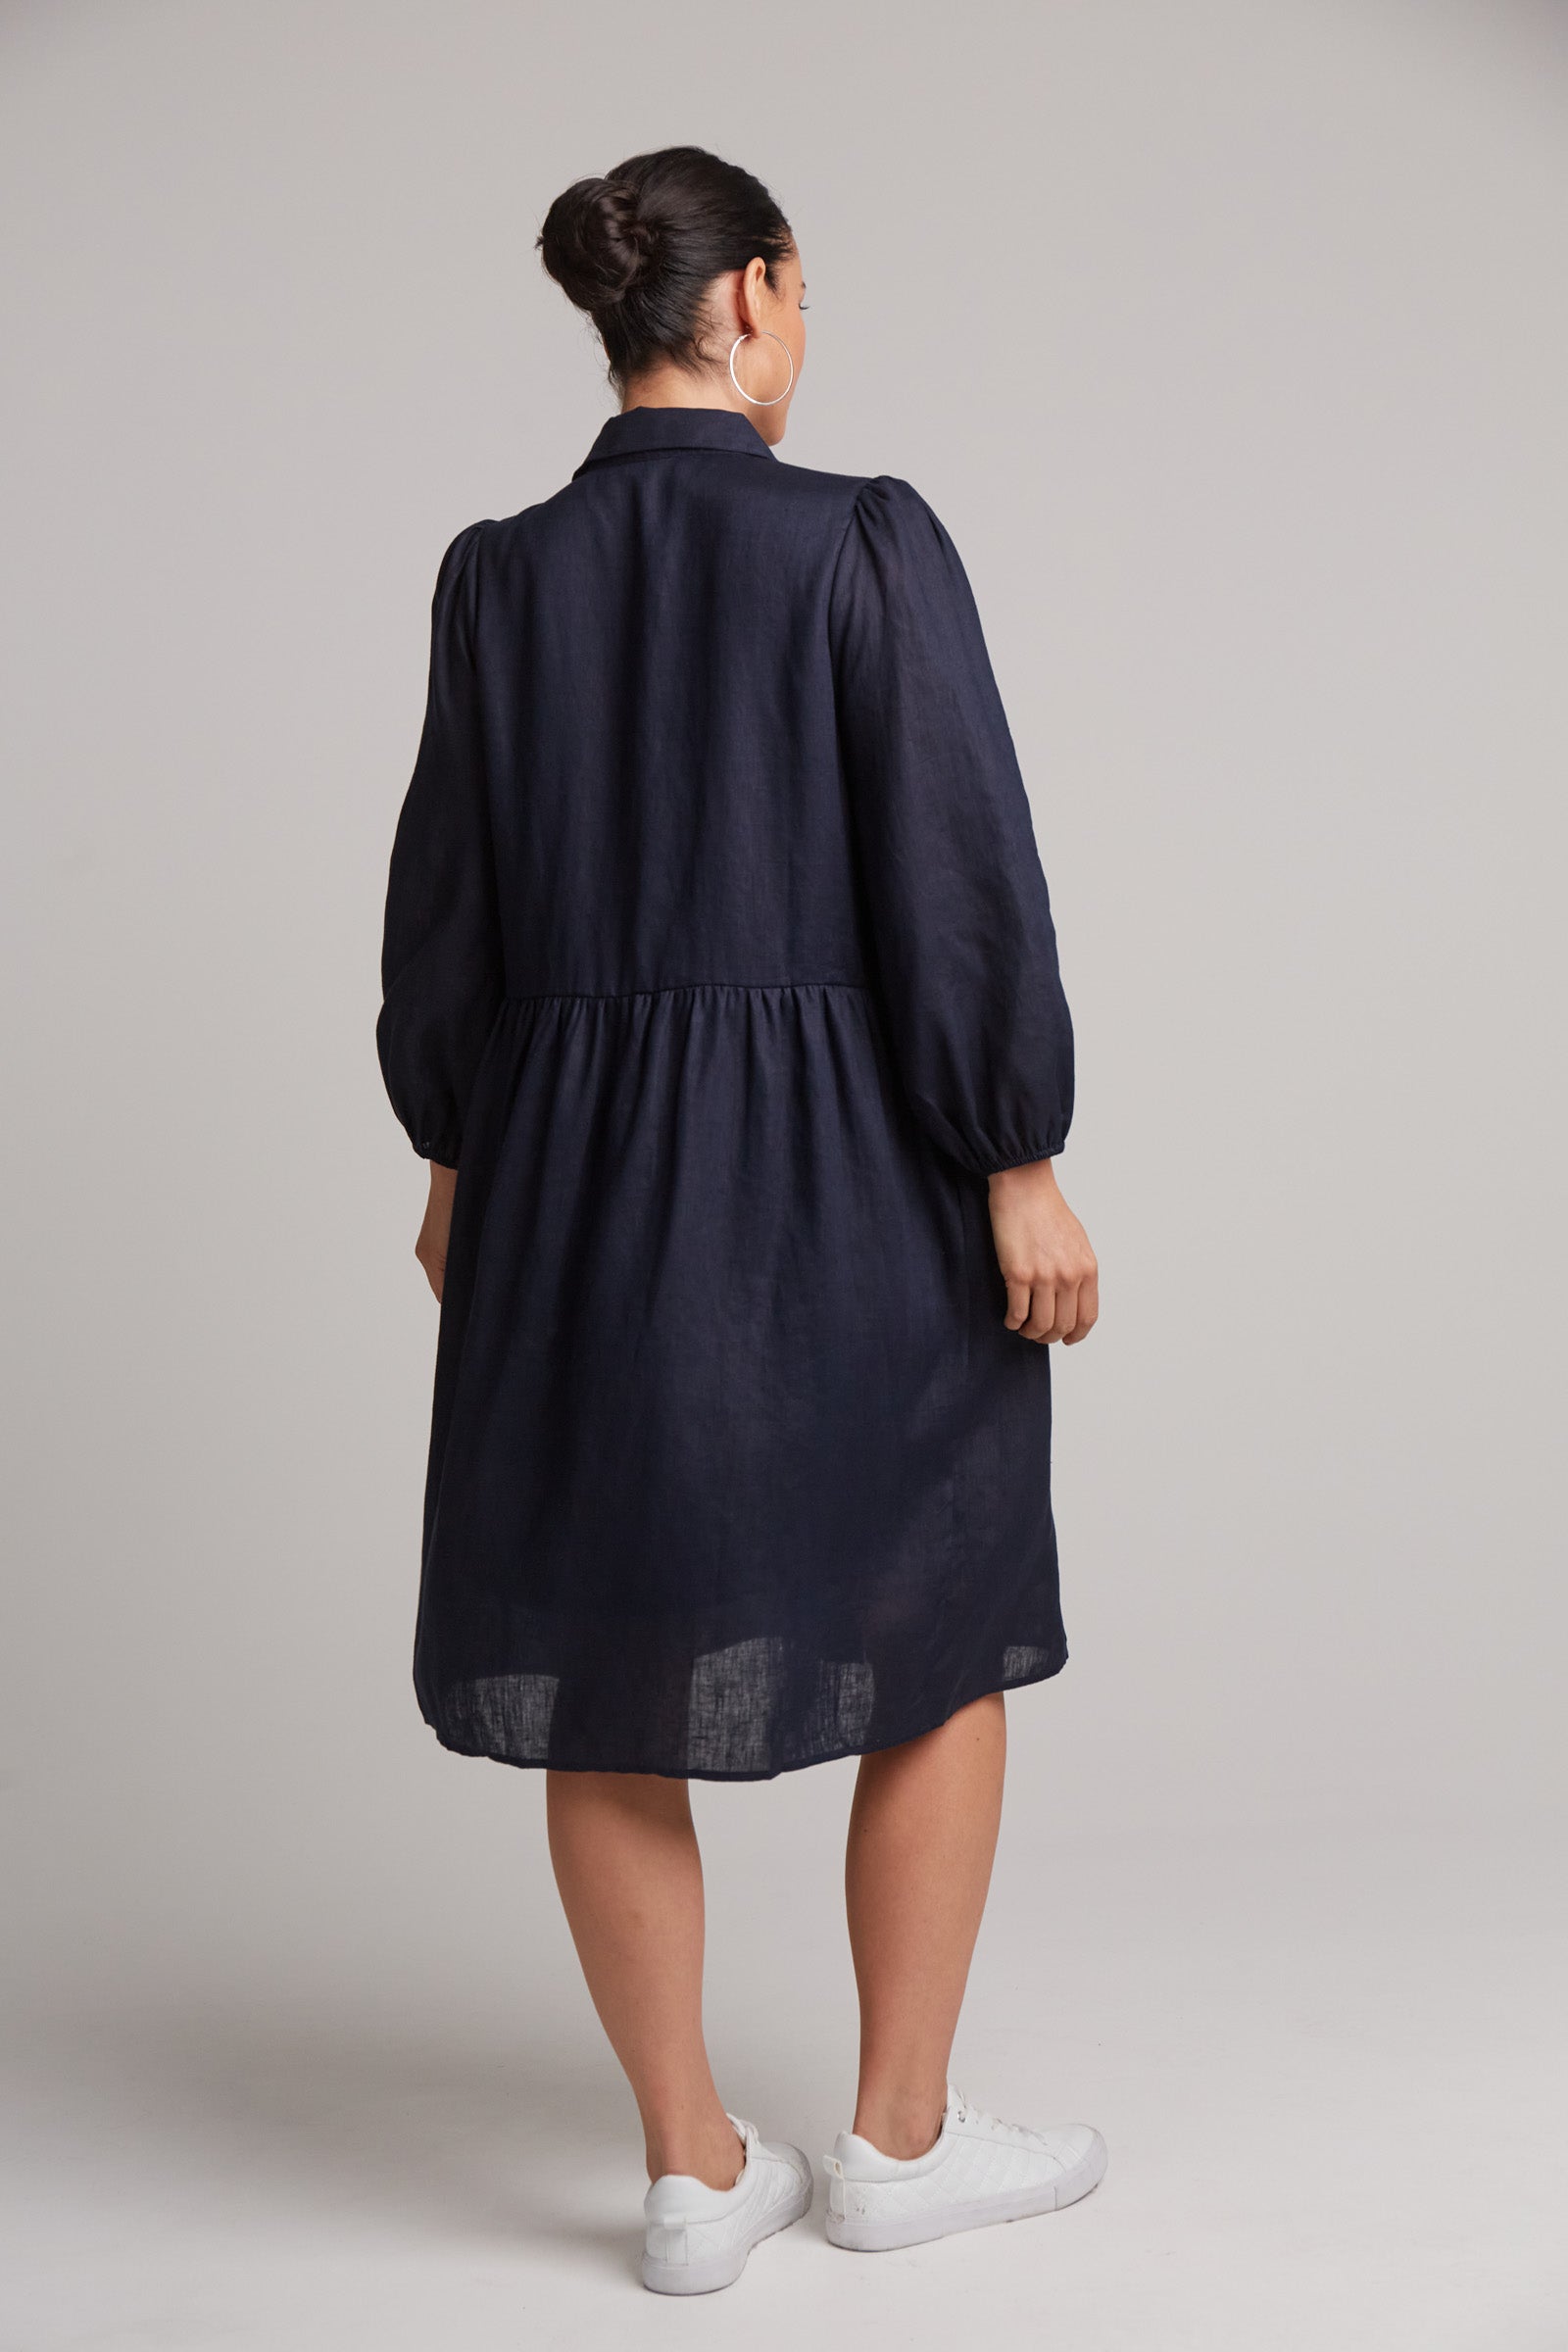 Studio Midi Shirt Dress - Navy - eb&ive Clothing - Dress Mid Linen